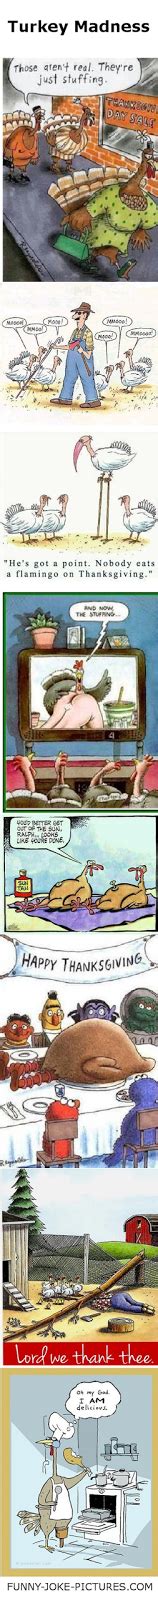 Thanksgiving Turkey Cartoons ~ Funny Joke Pictures